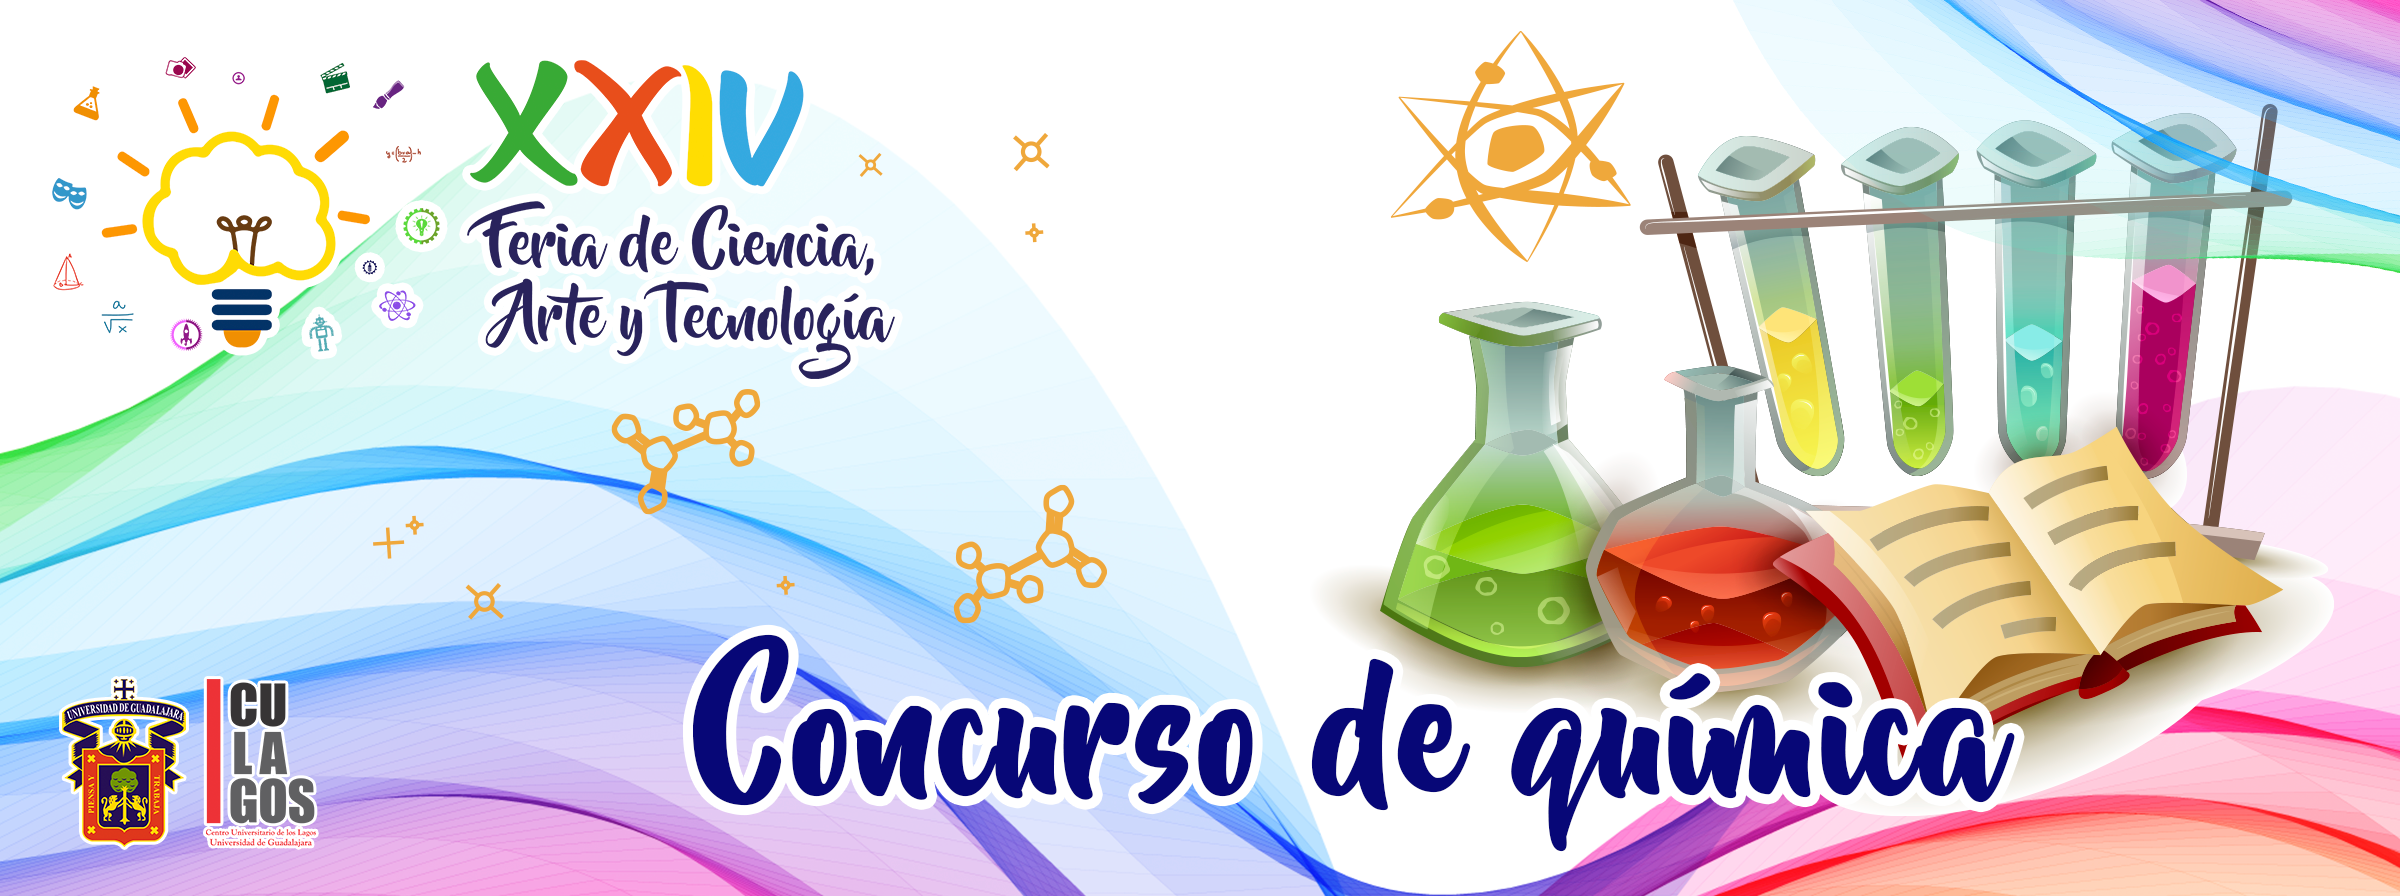 Banner - Concurso de química